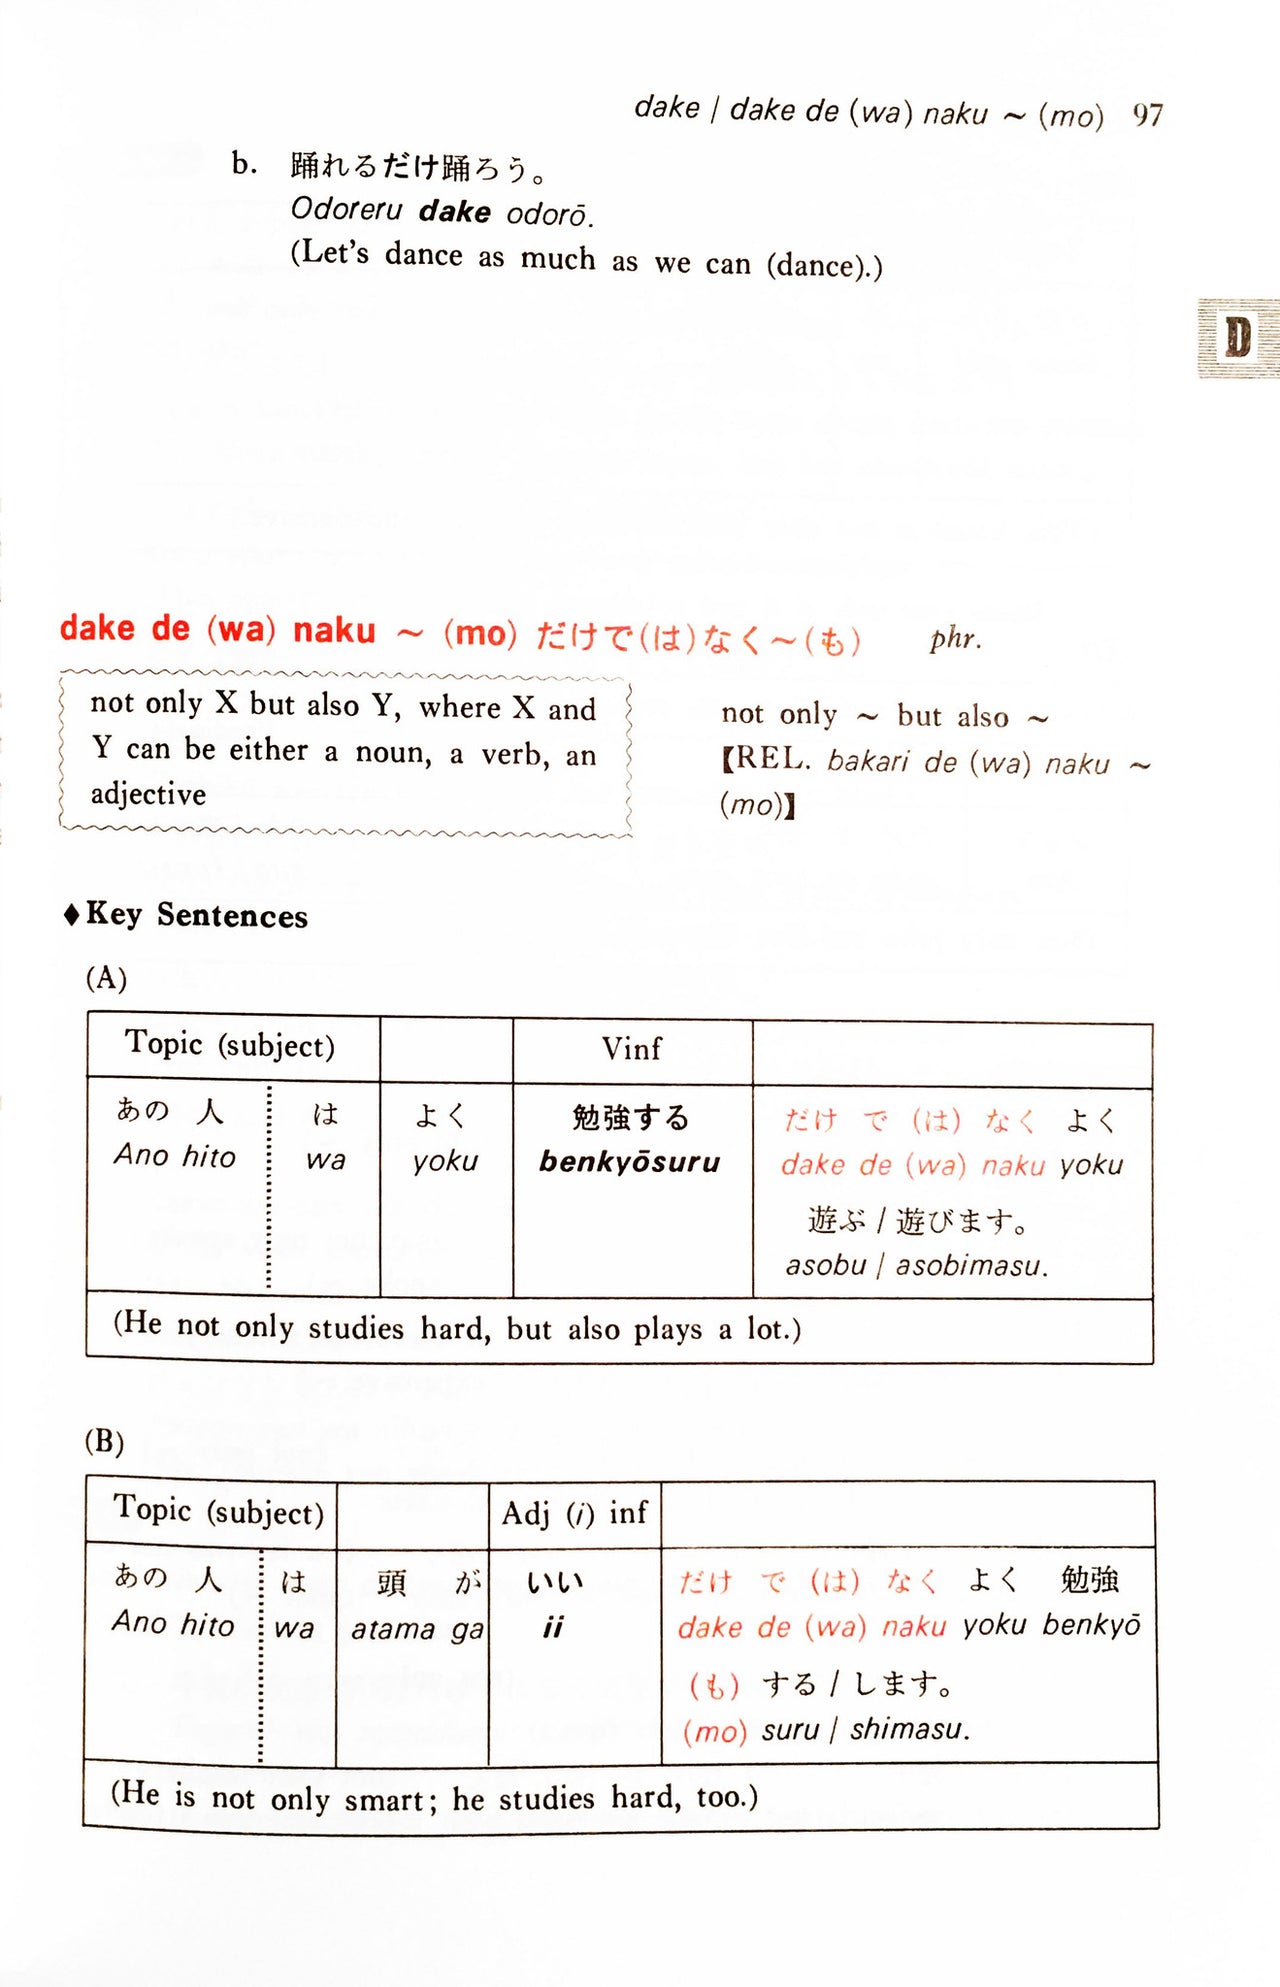 A Dictionary of Basic Japanese Grammar - The Japan Shop